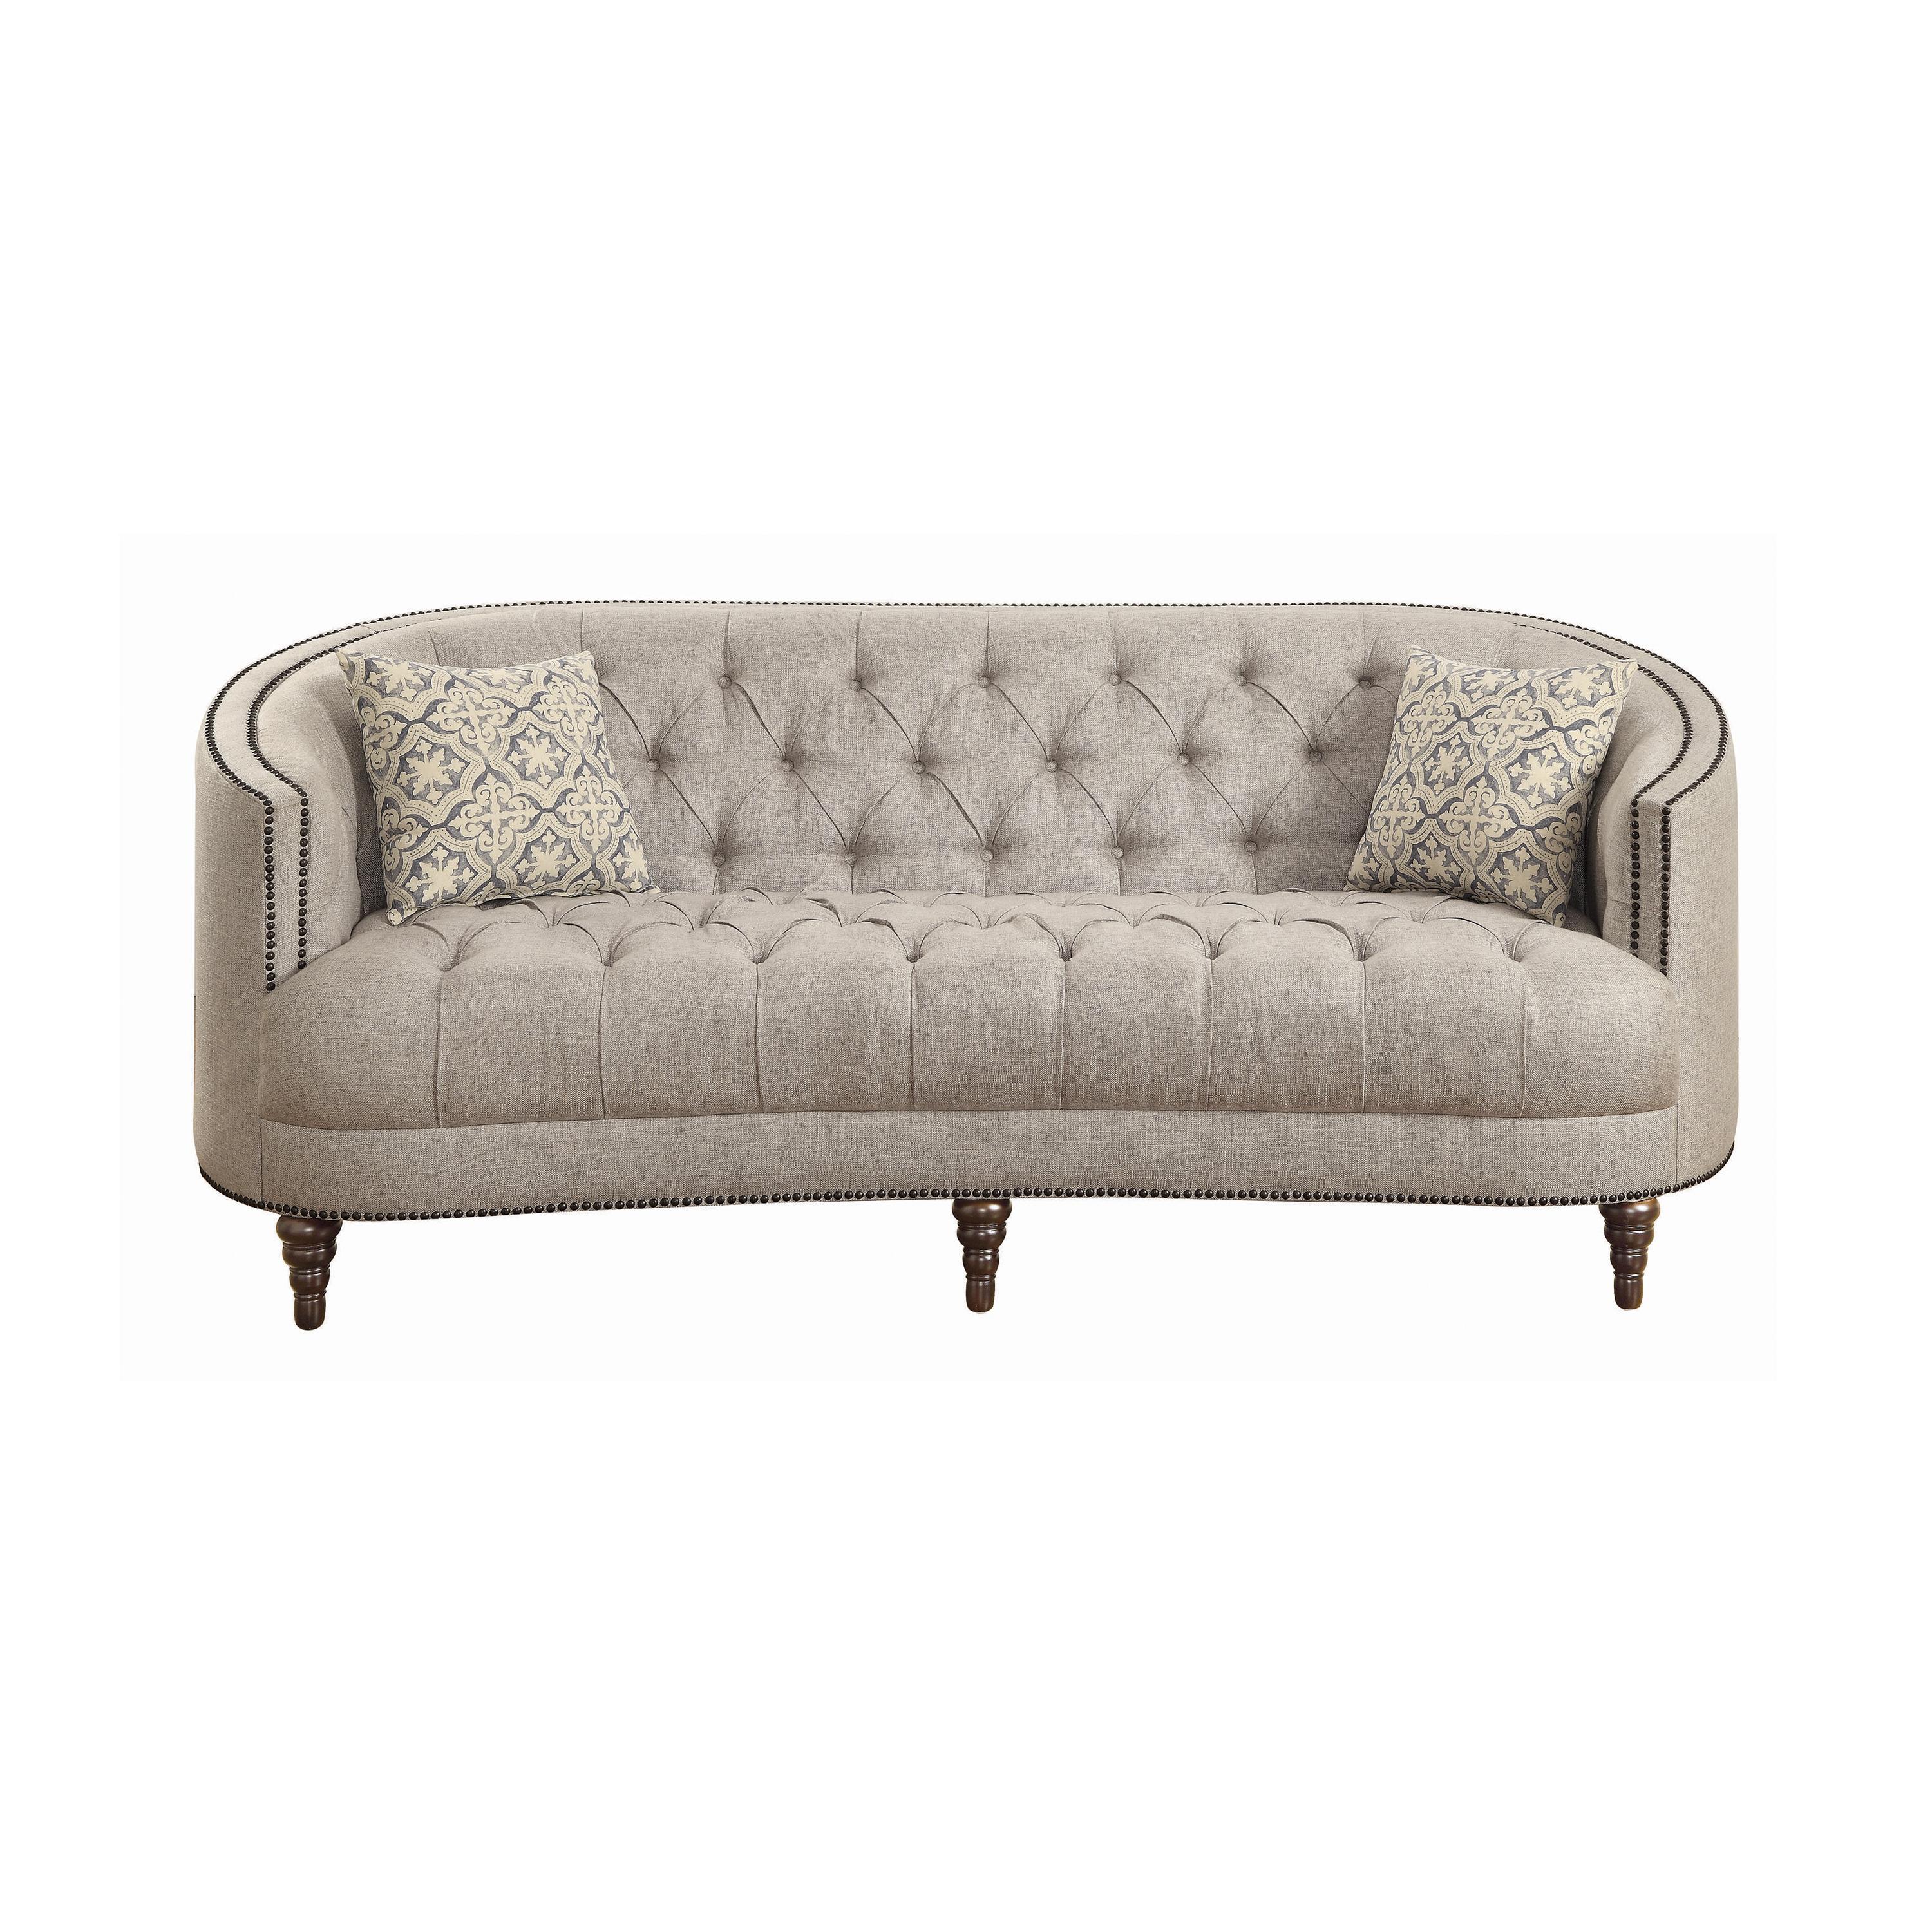 Classic Sofa 505641 Avonlea 505641 in Gray 